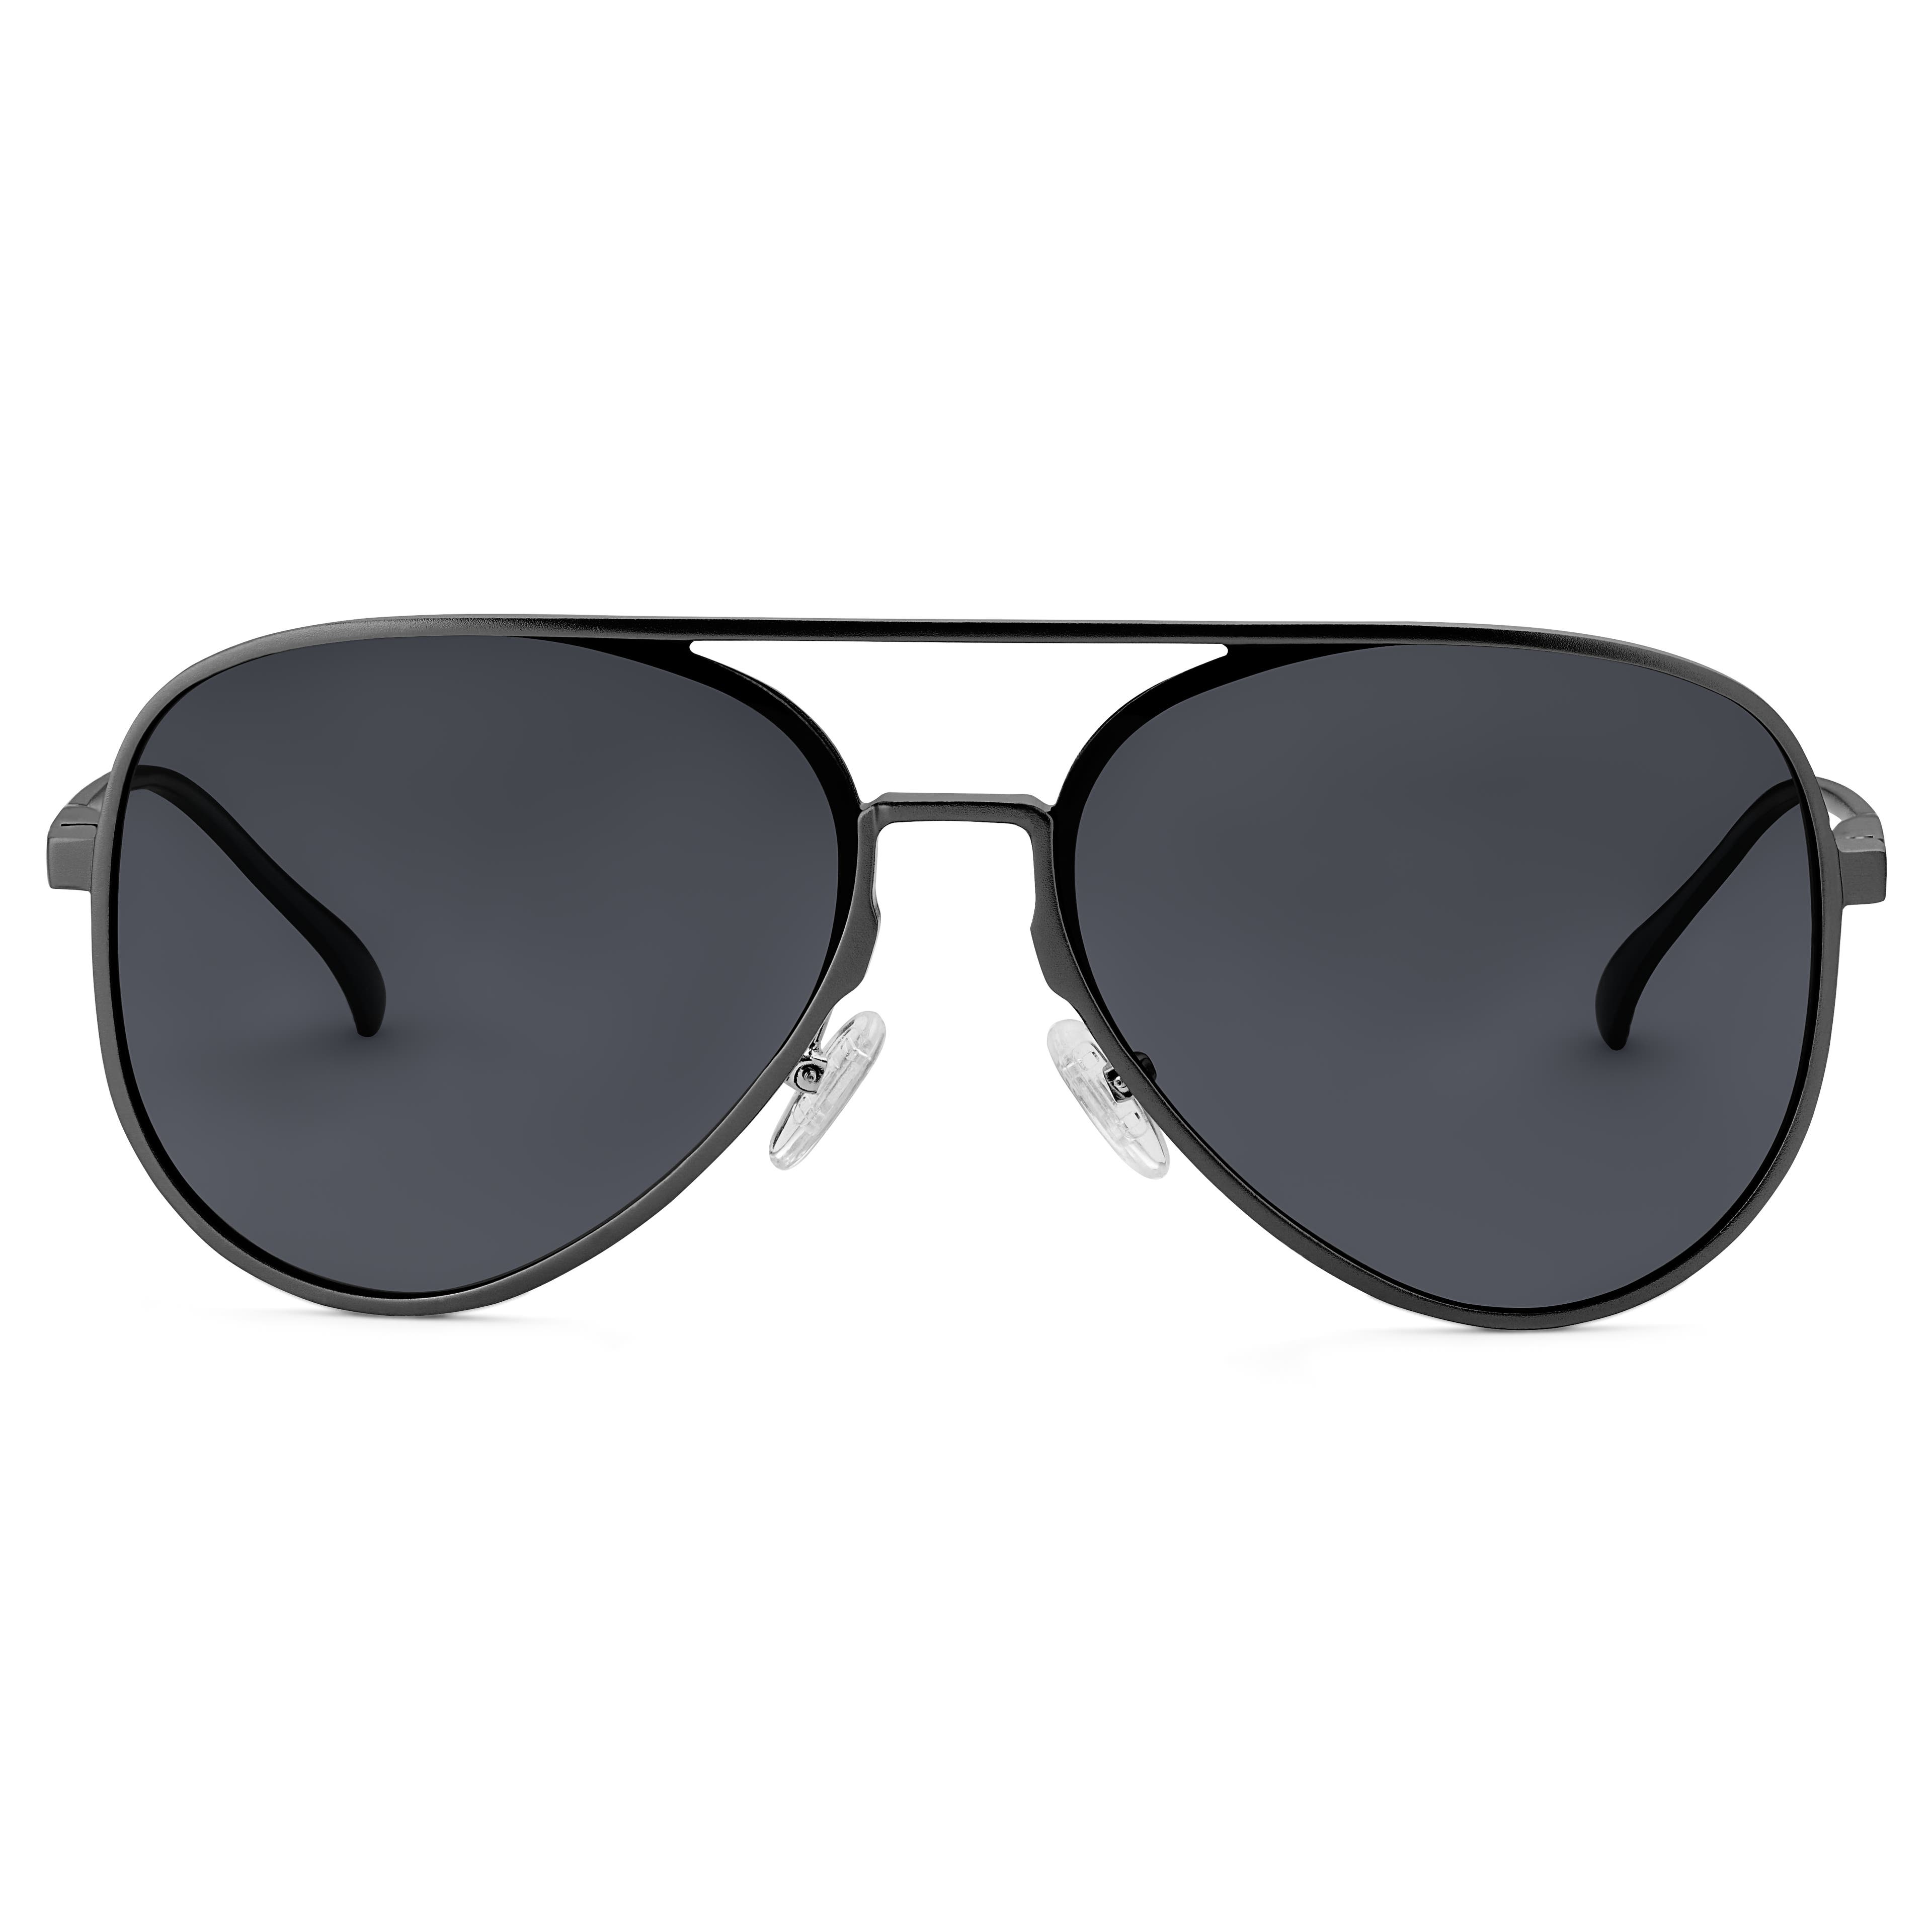 Gafas de sol aviator polarizadas en negro ahumado